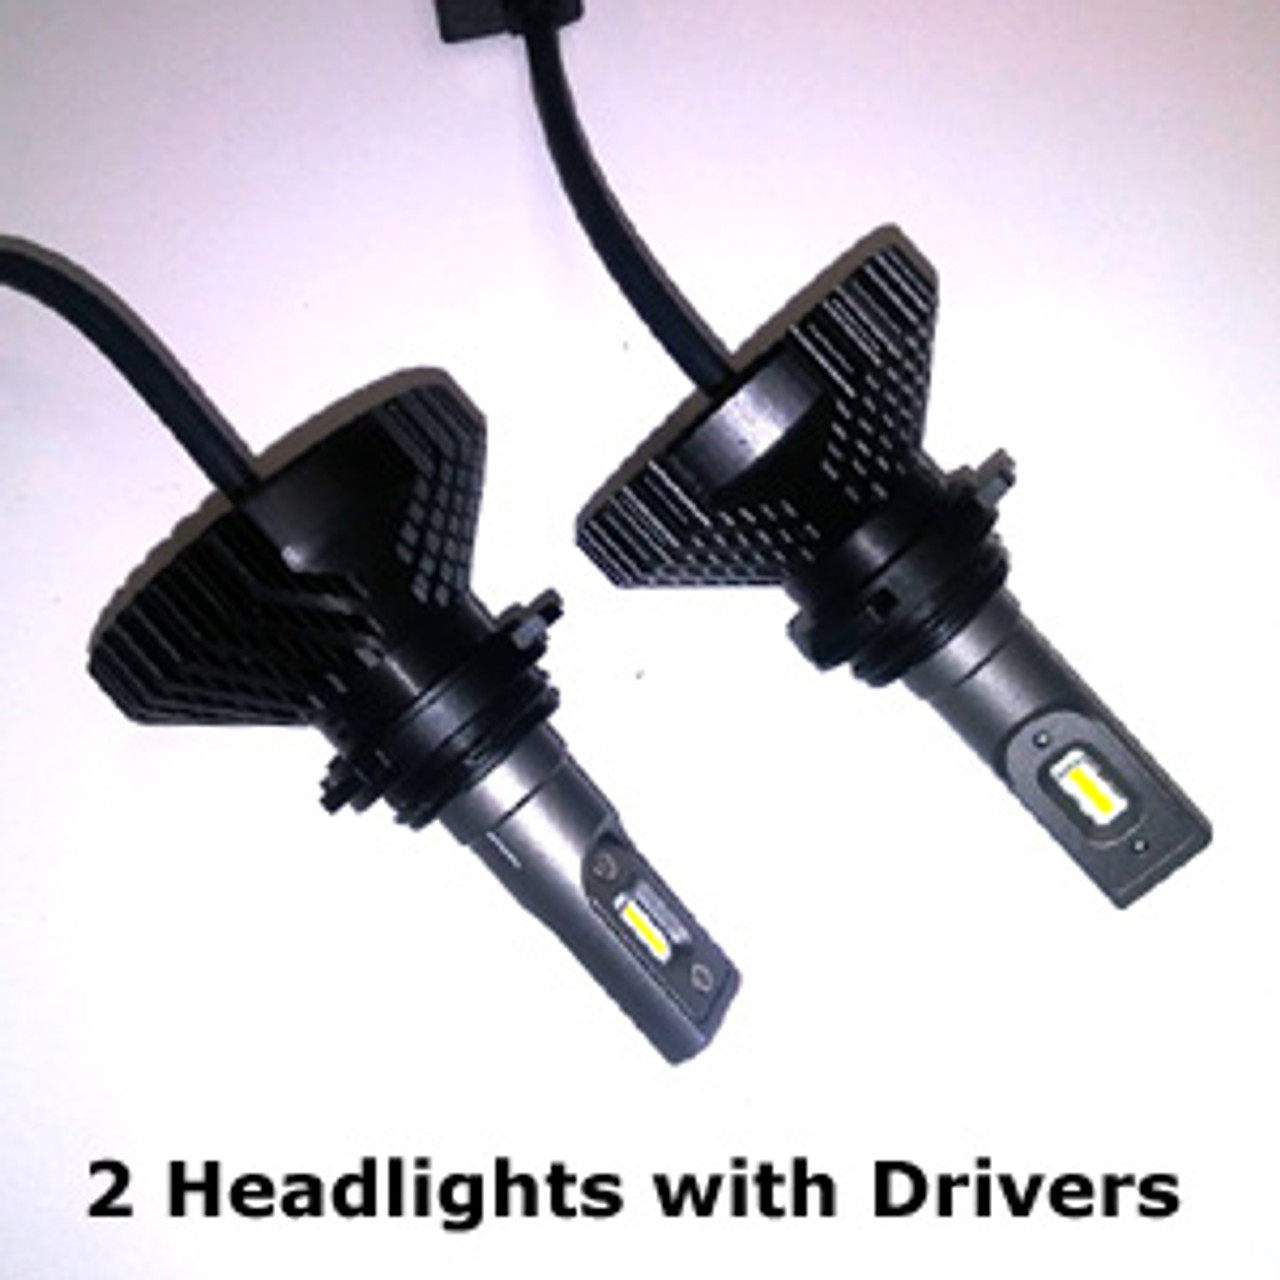 HEADLIGHTS-9006-V6s Headlight Kit with 9006 (HB4) Bases